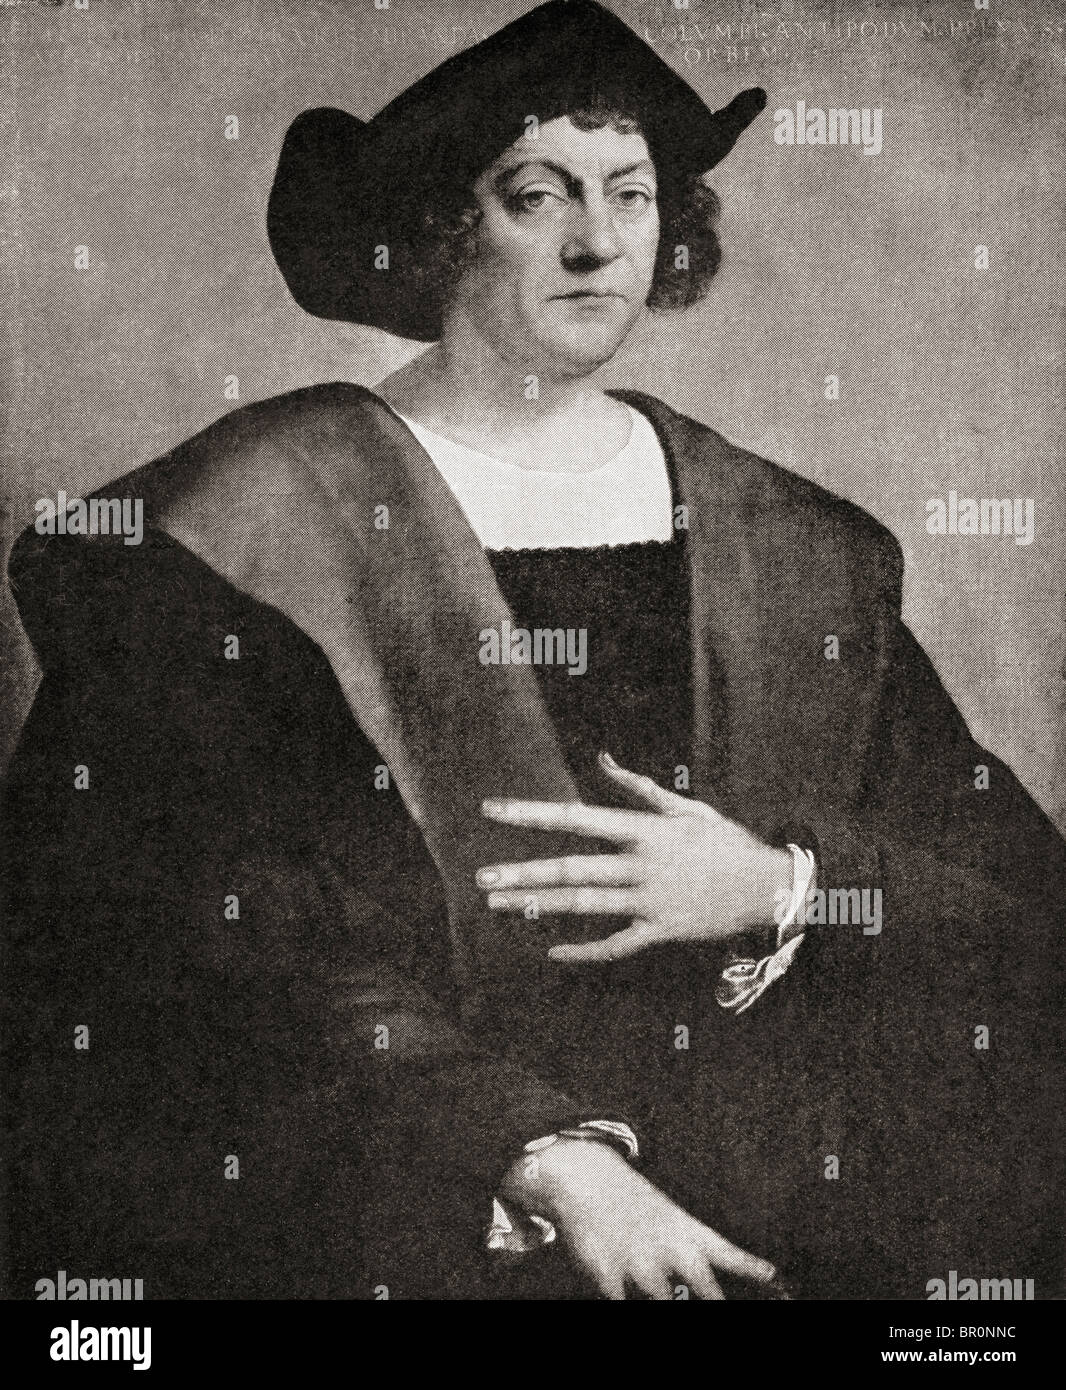 Christopher Columbus, c.1451 to 1506. Italian navigator, colonizer and explorer. Stock Photo